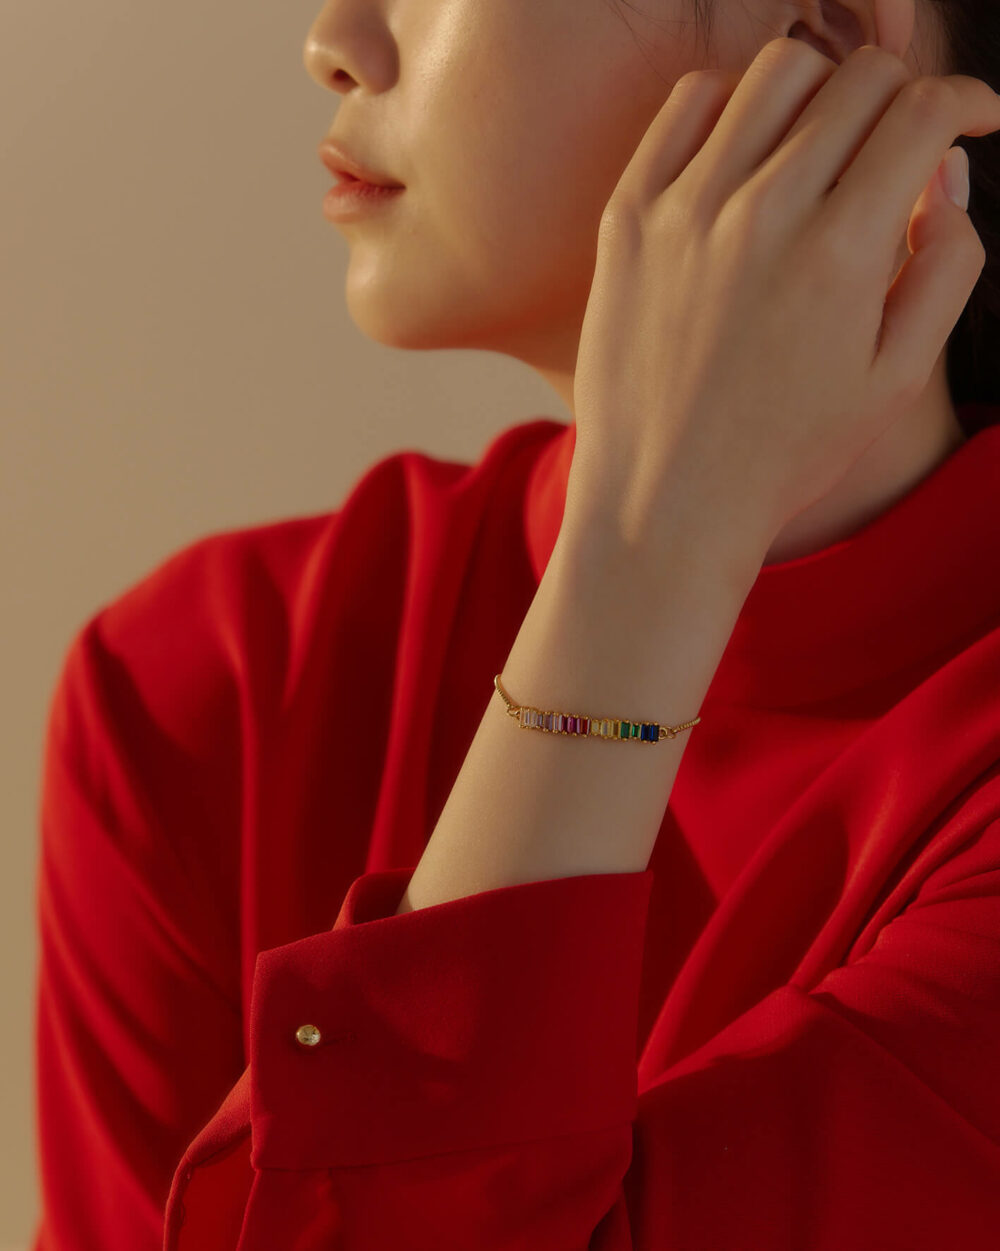 Eco安珂,韓國飾品,韓國手鏈,韓國手鍊,韓國手鍊,韓國手鏈,手鏈,手鍊,調節手鍊,排鑽手鍊,彩鑽手鍊